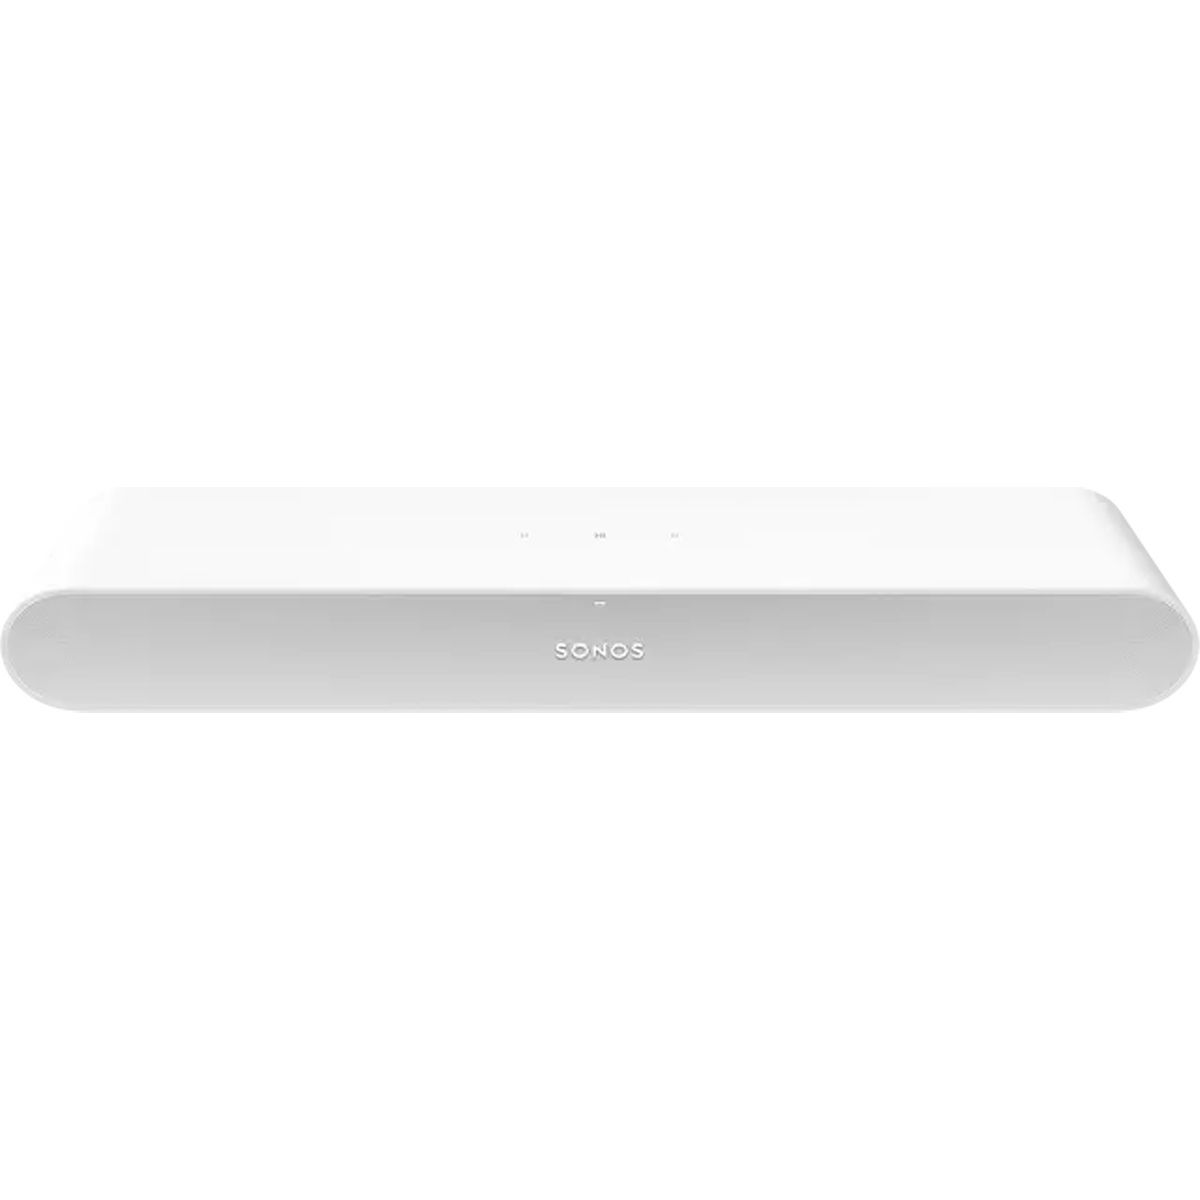 Sonos Ray Compact Soundbar - White - angled front view